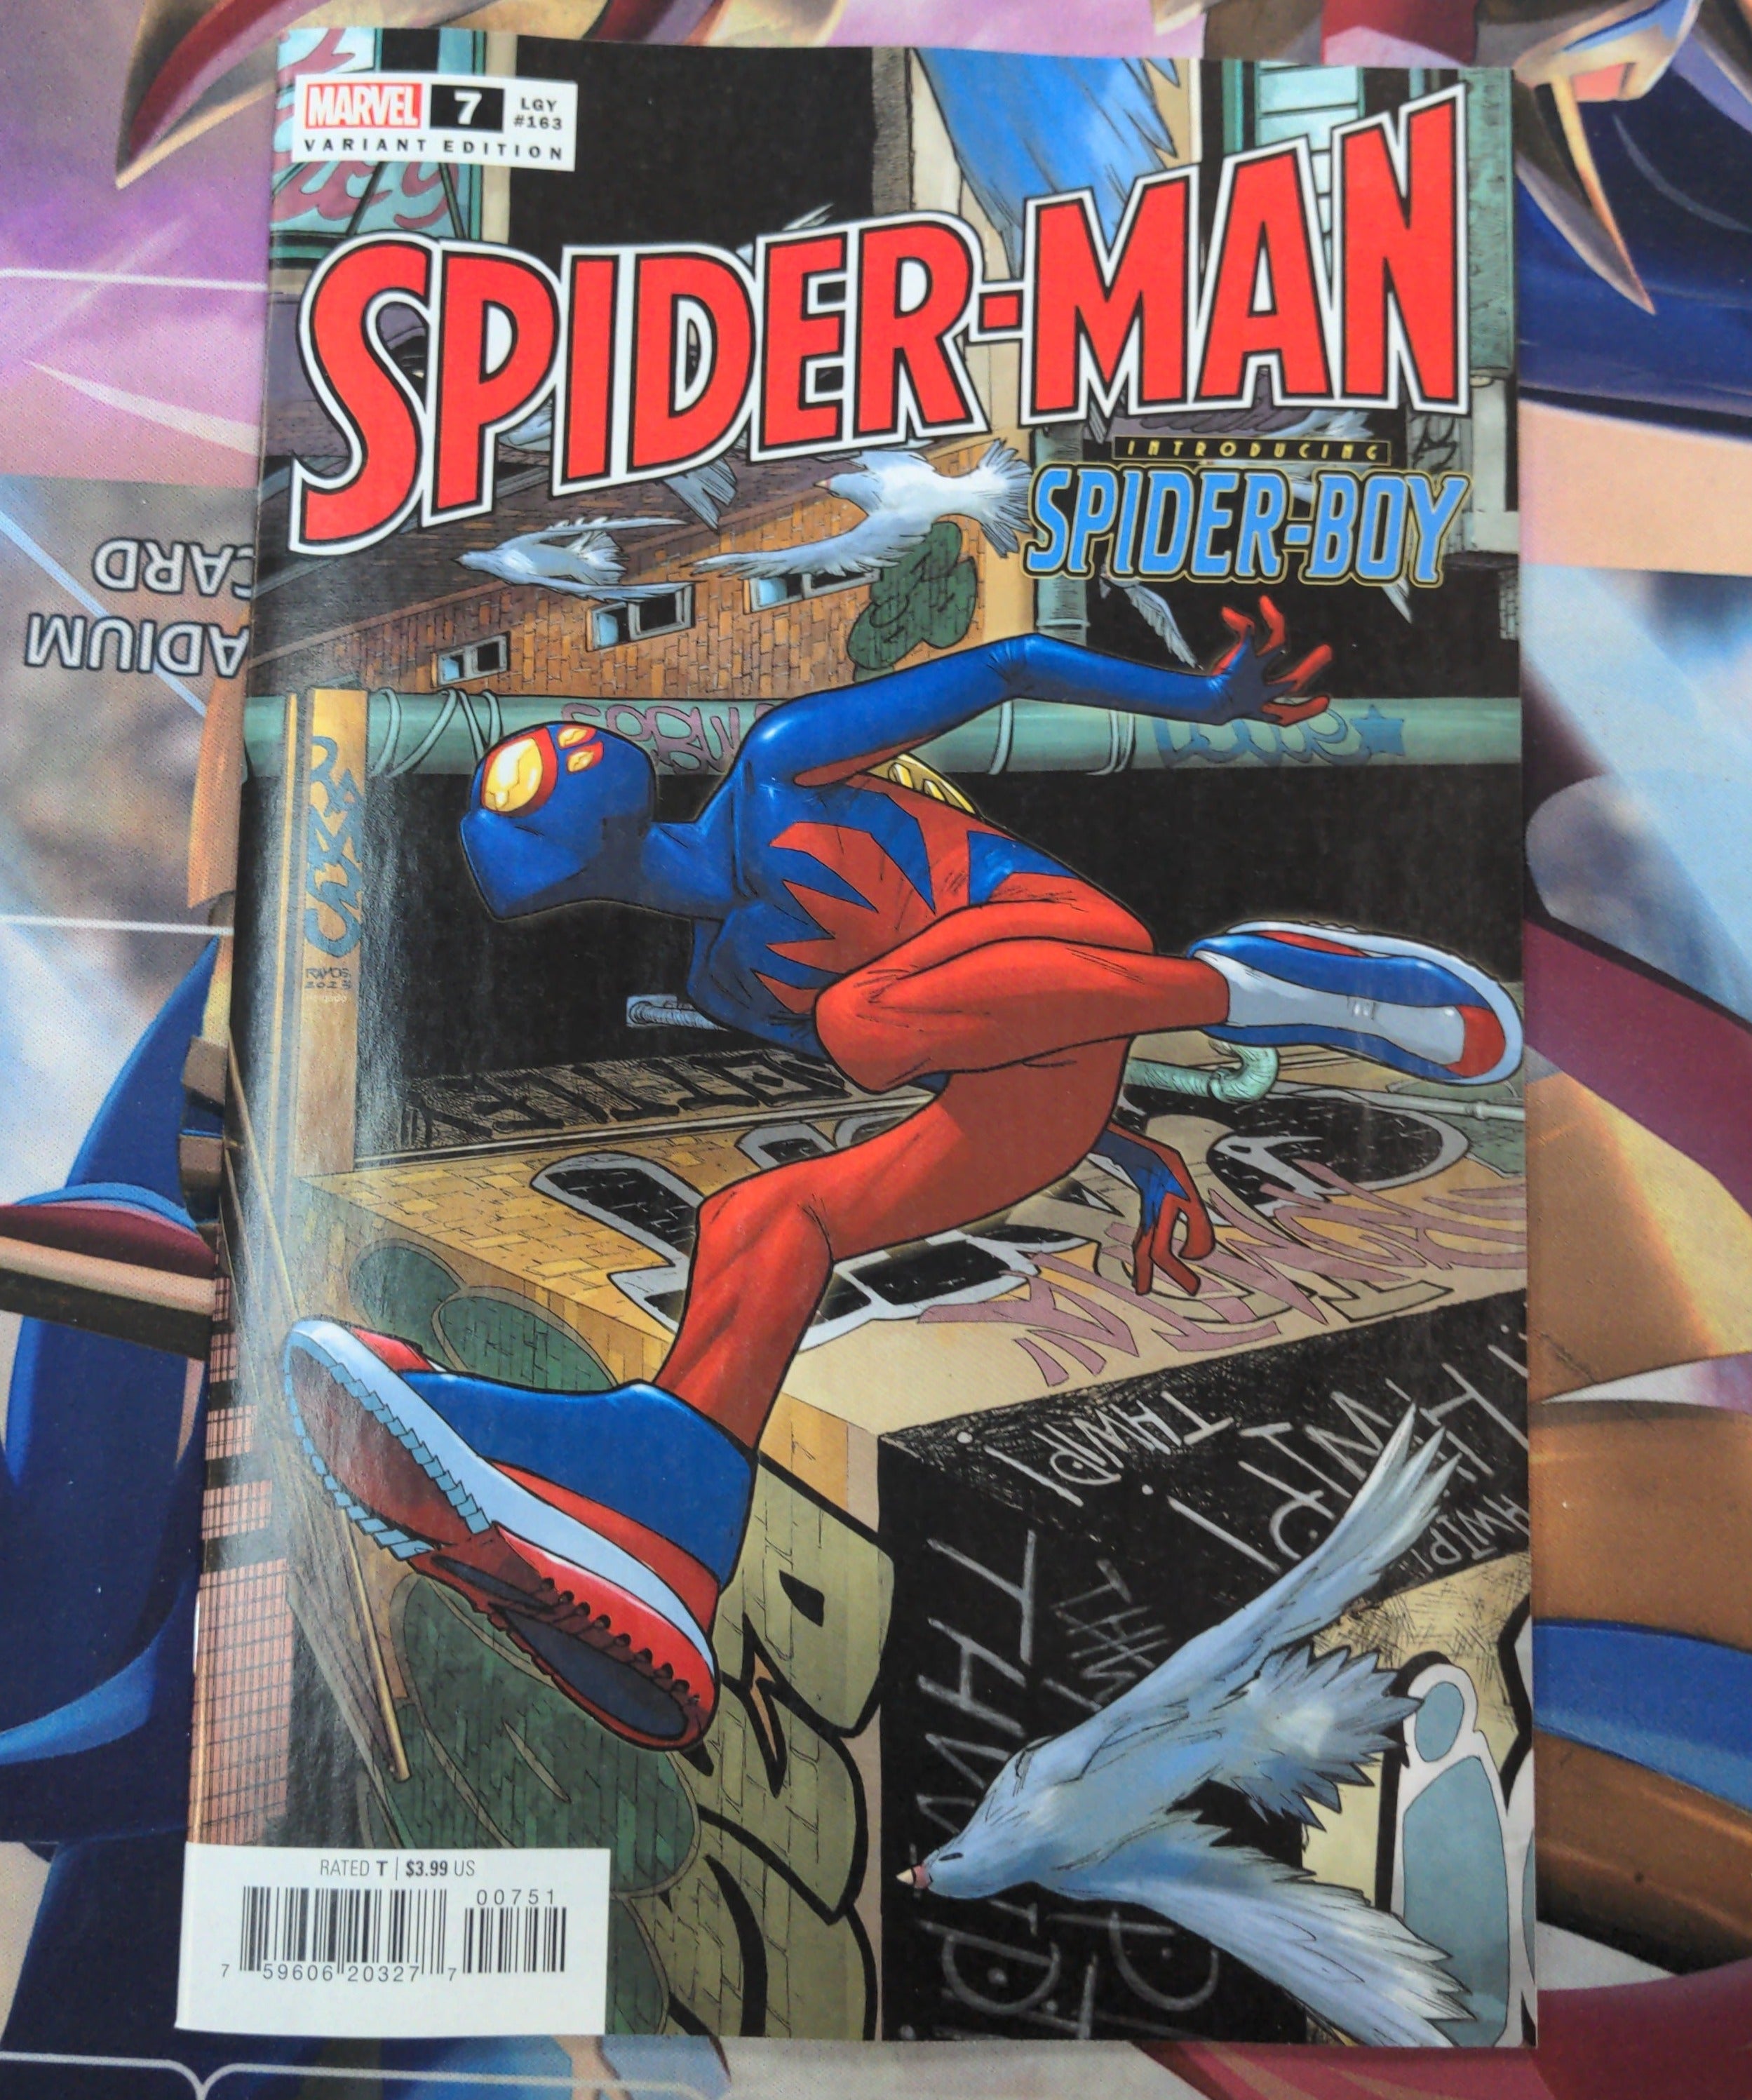 Spider-Man #7 (2022) Marvel Spoiler Sortie Spider-Boy 04/05/2023 | BD Cosmos